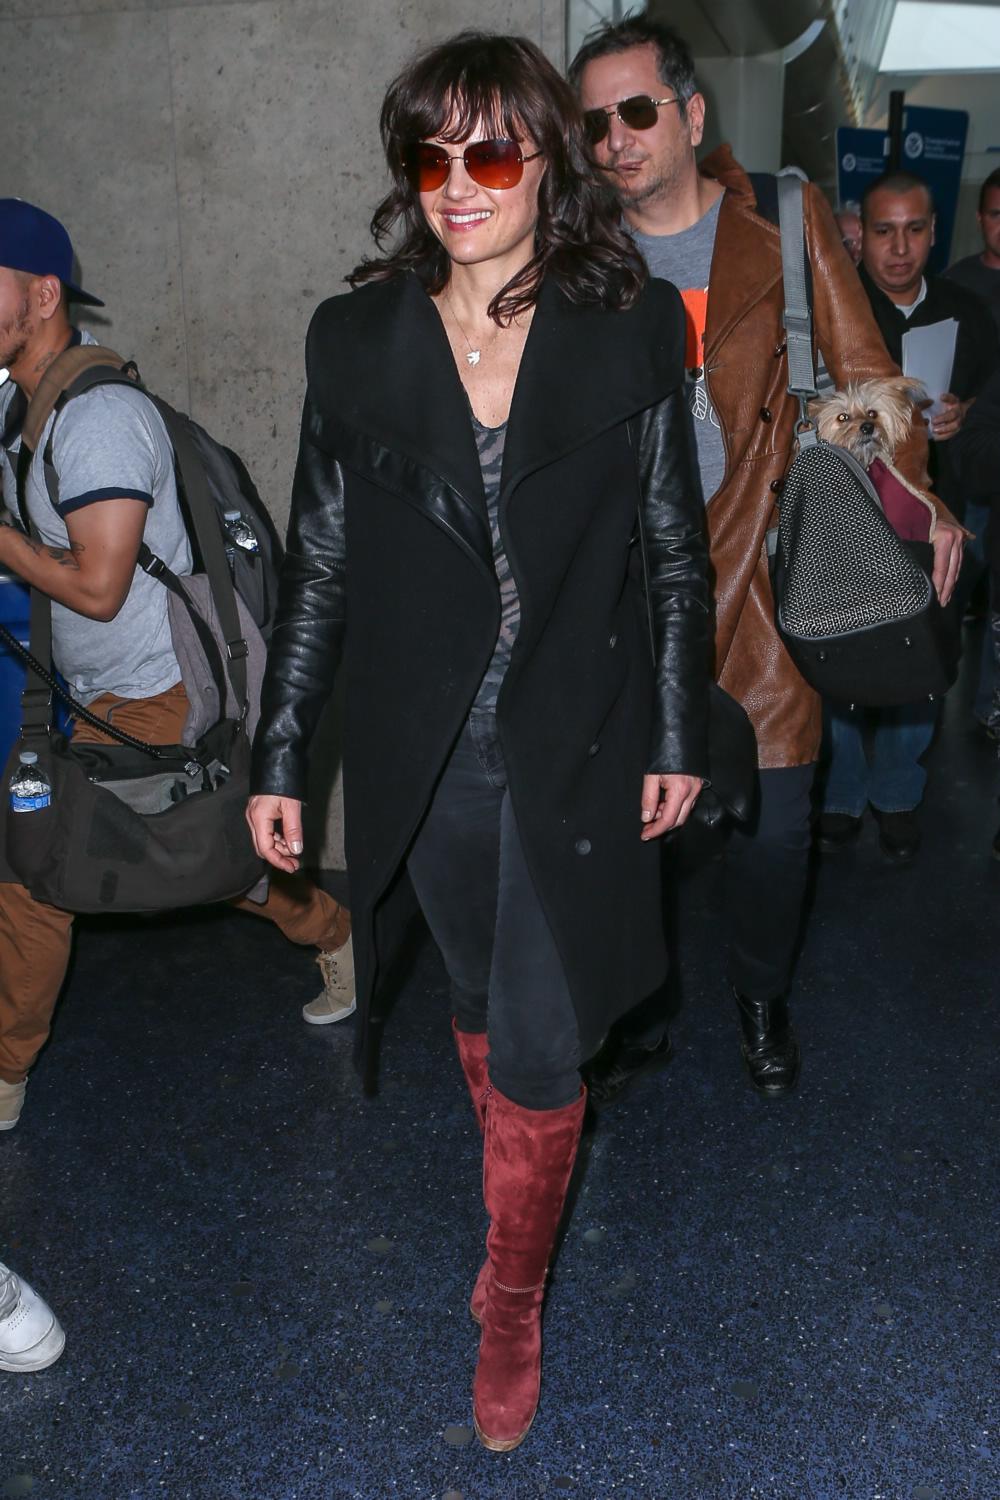 Carla Gugino arrives at LAX Airport